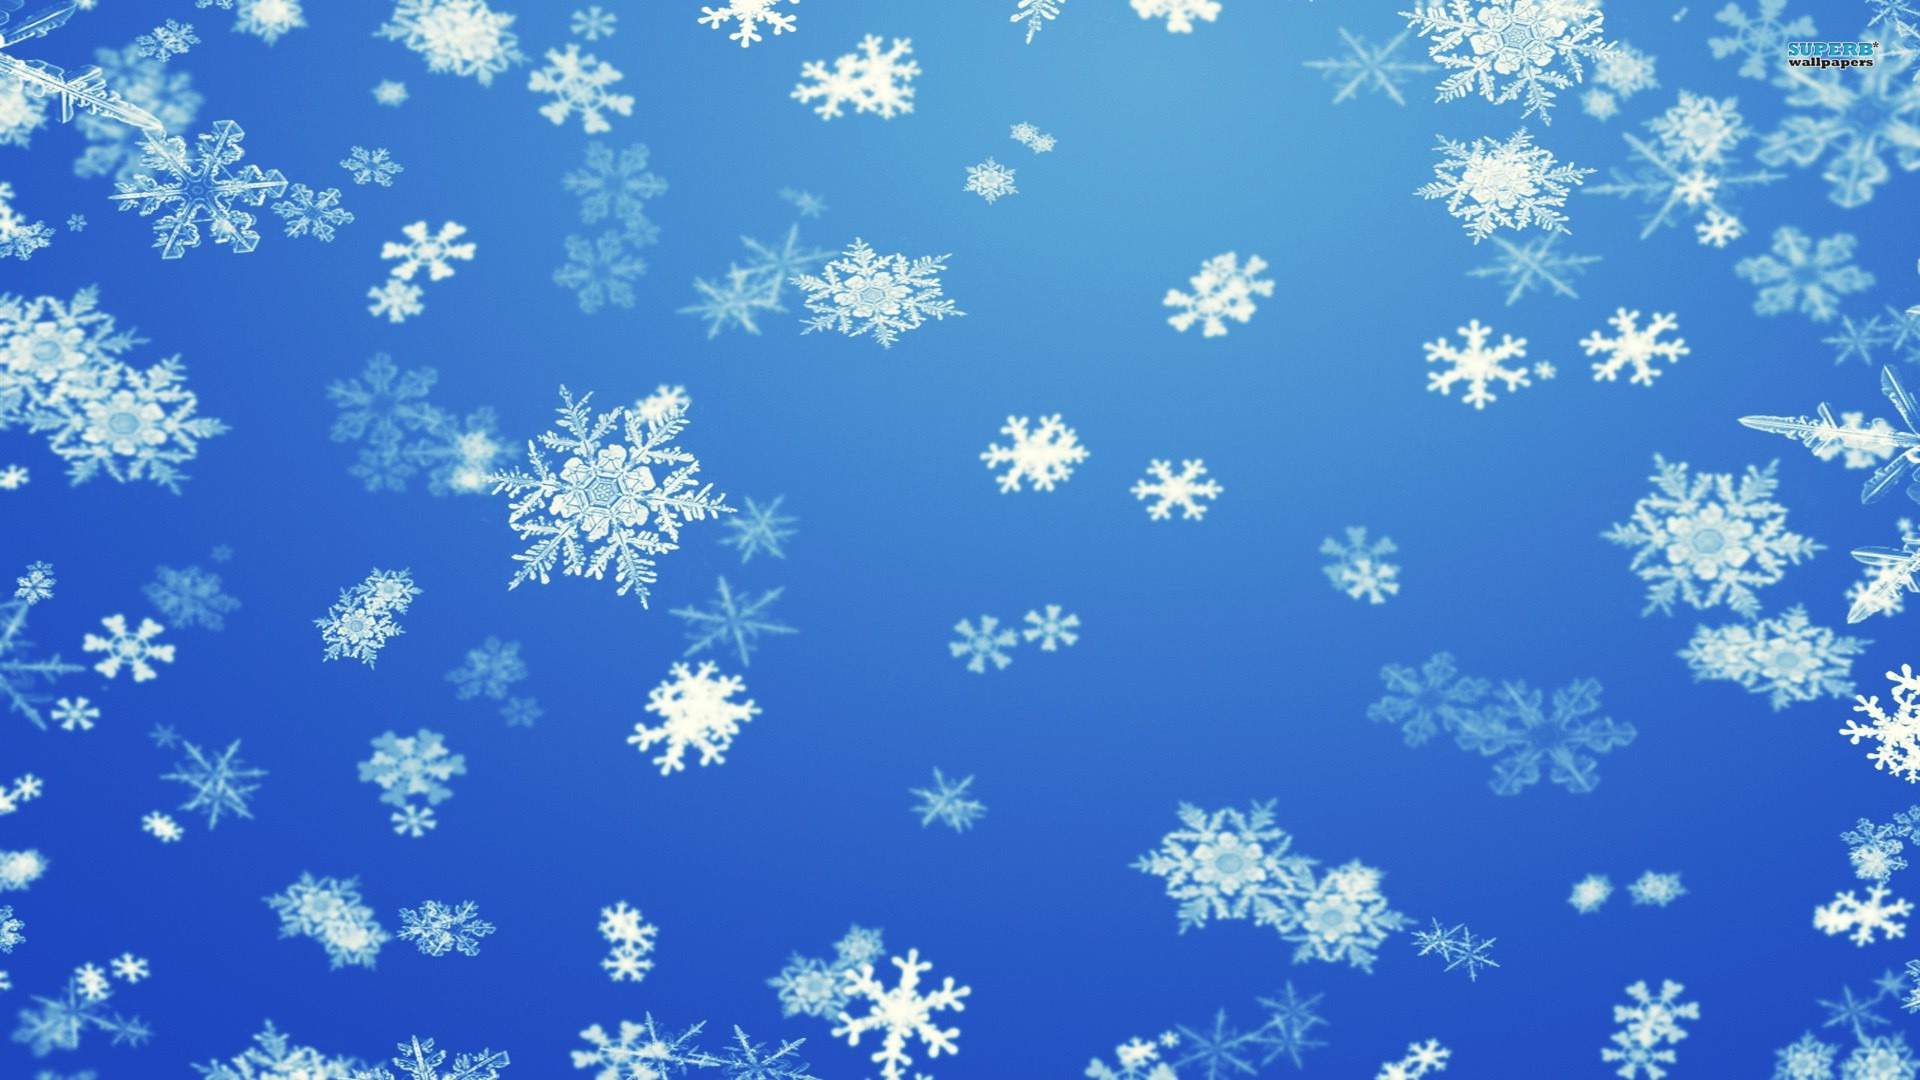 many-snowflakes.jpg